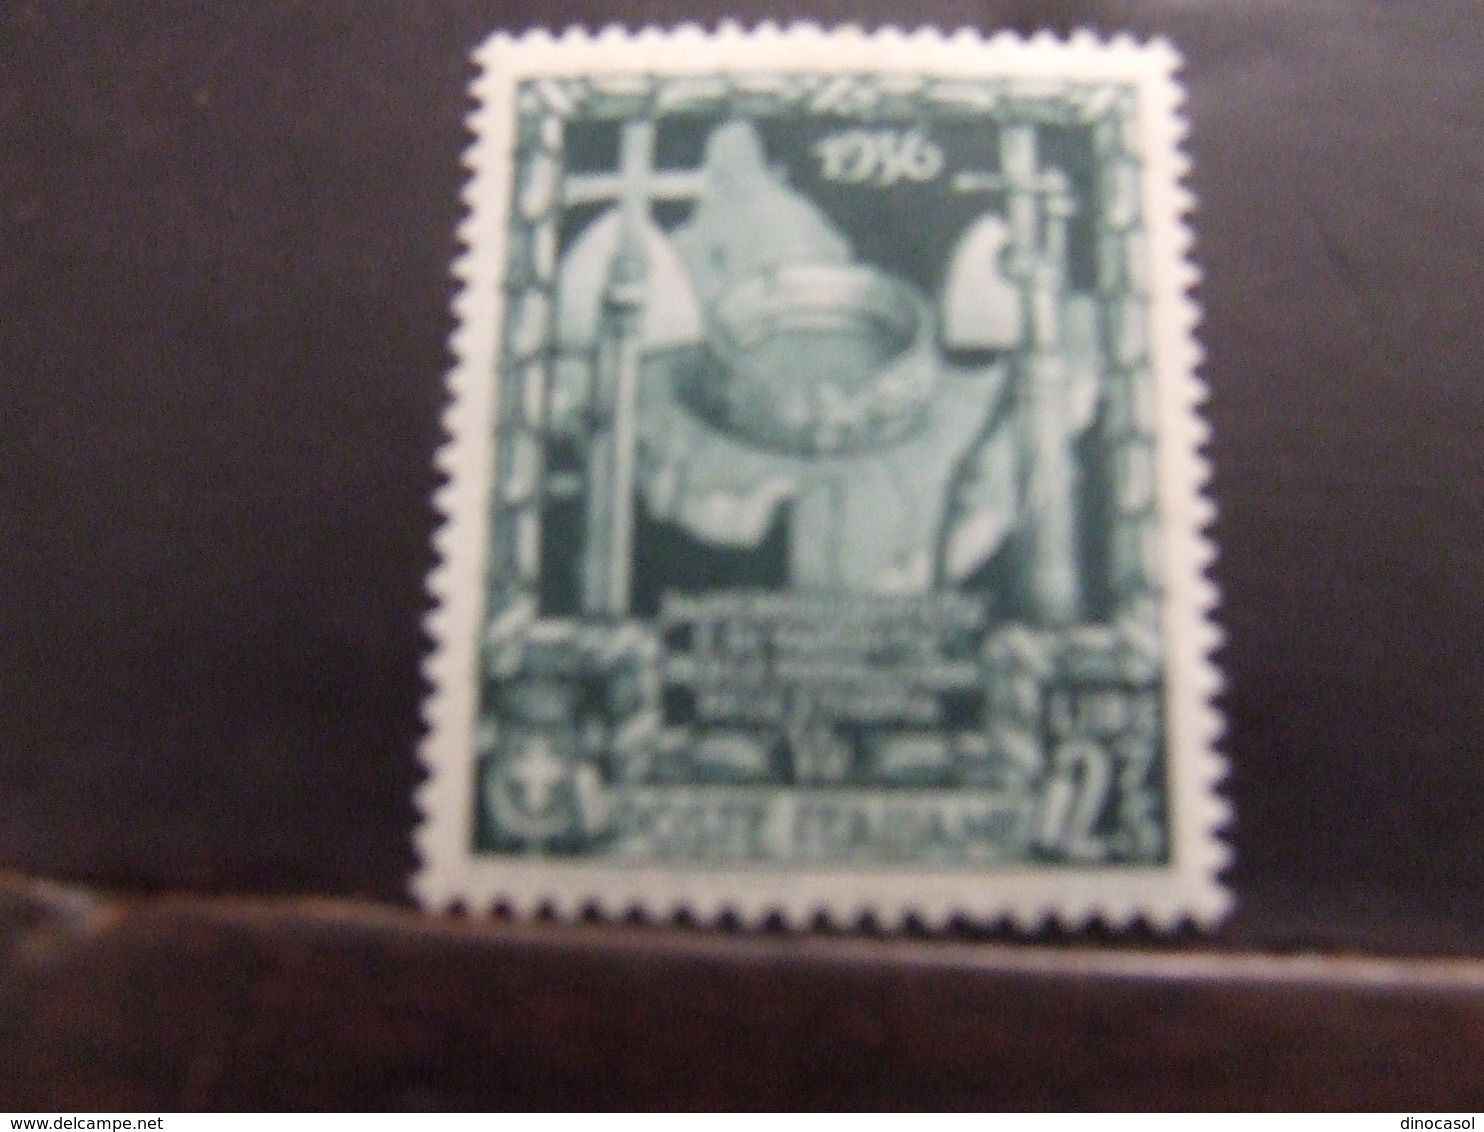 ITALIA 1938 IMPERO 2,75 L NUOVO * - Mint/hinged